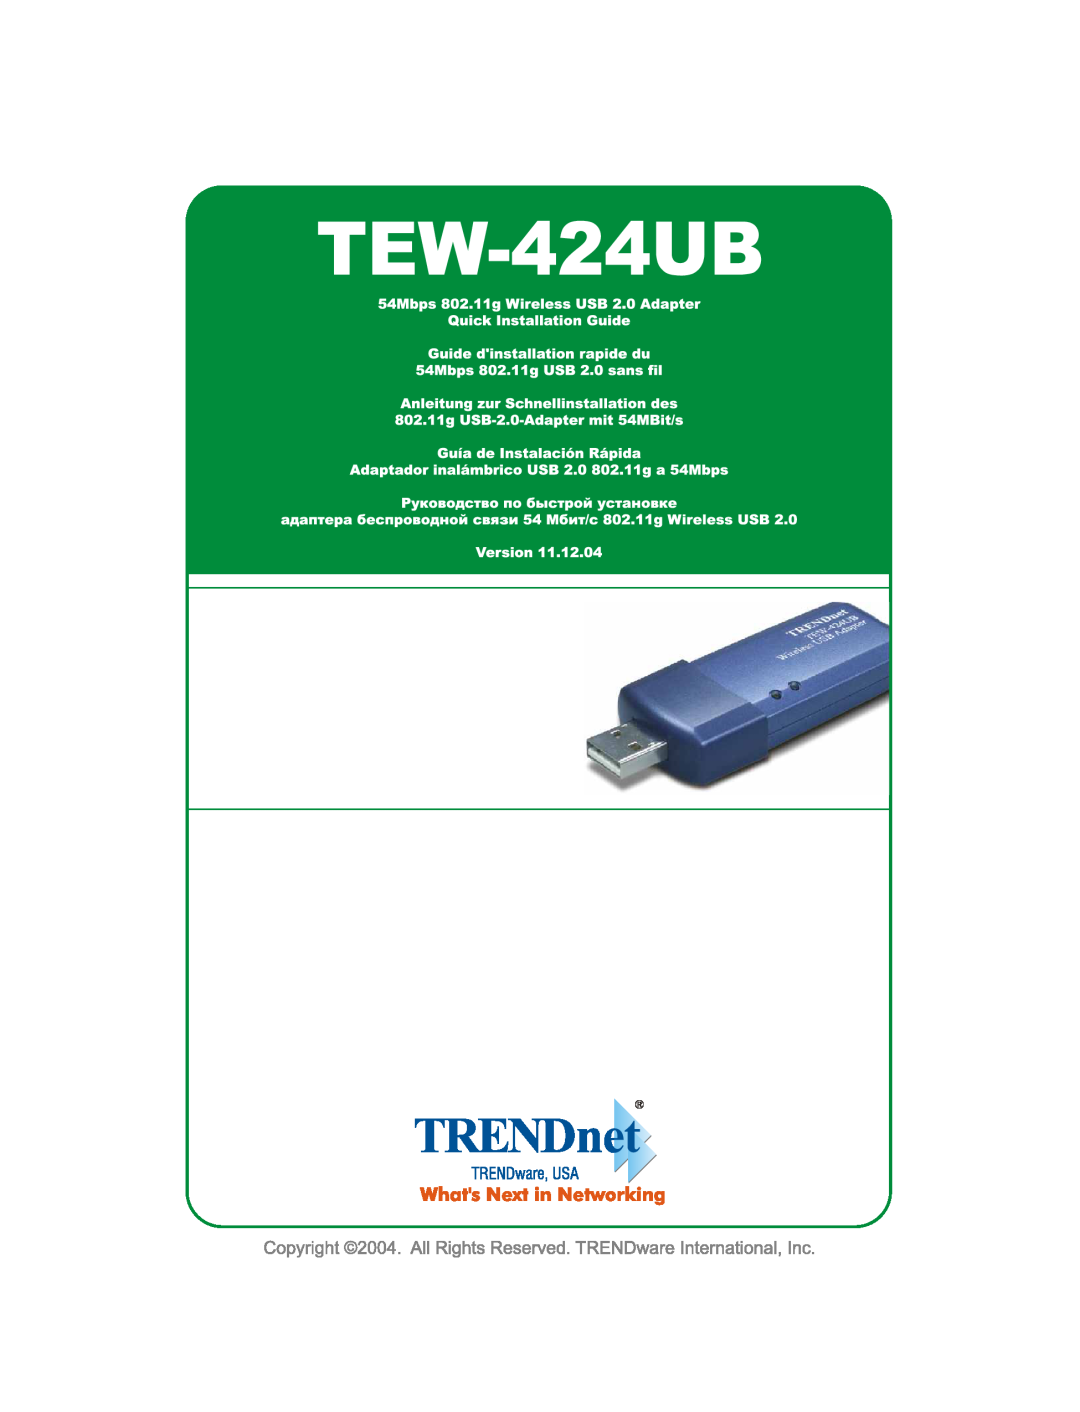 TRENDnet TEW-424UB manual 